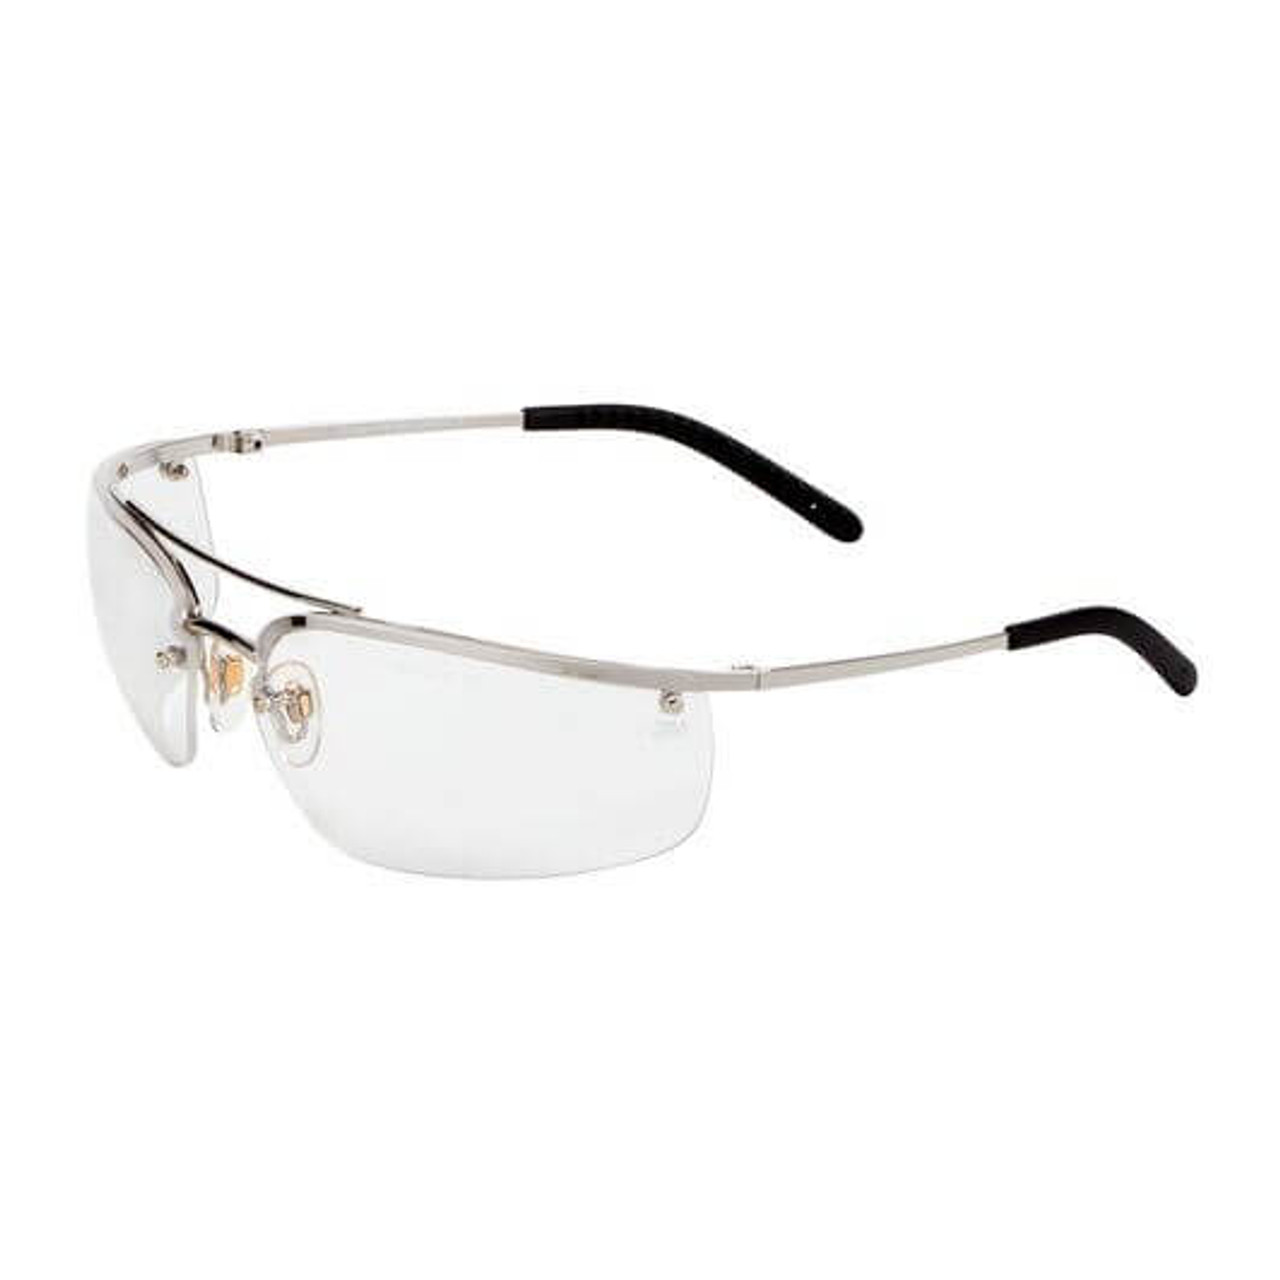 3M Metaliks Safety Glasses Polished Eye Protection Anti-Fog Lens 15172-10000-20 